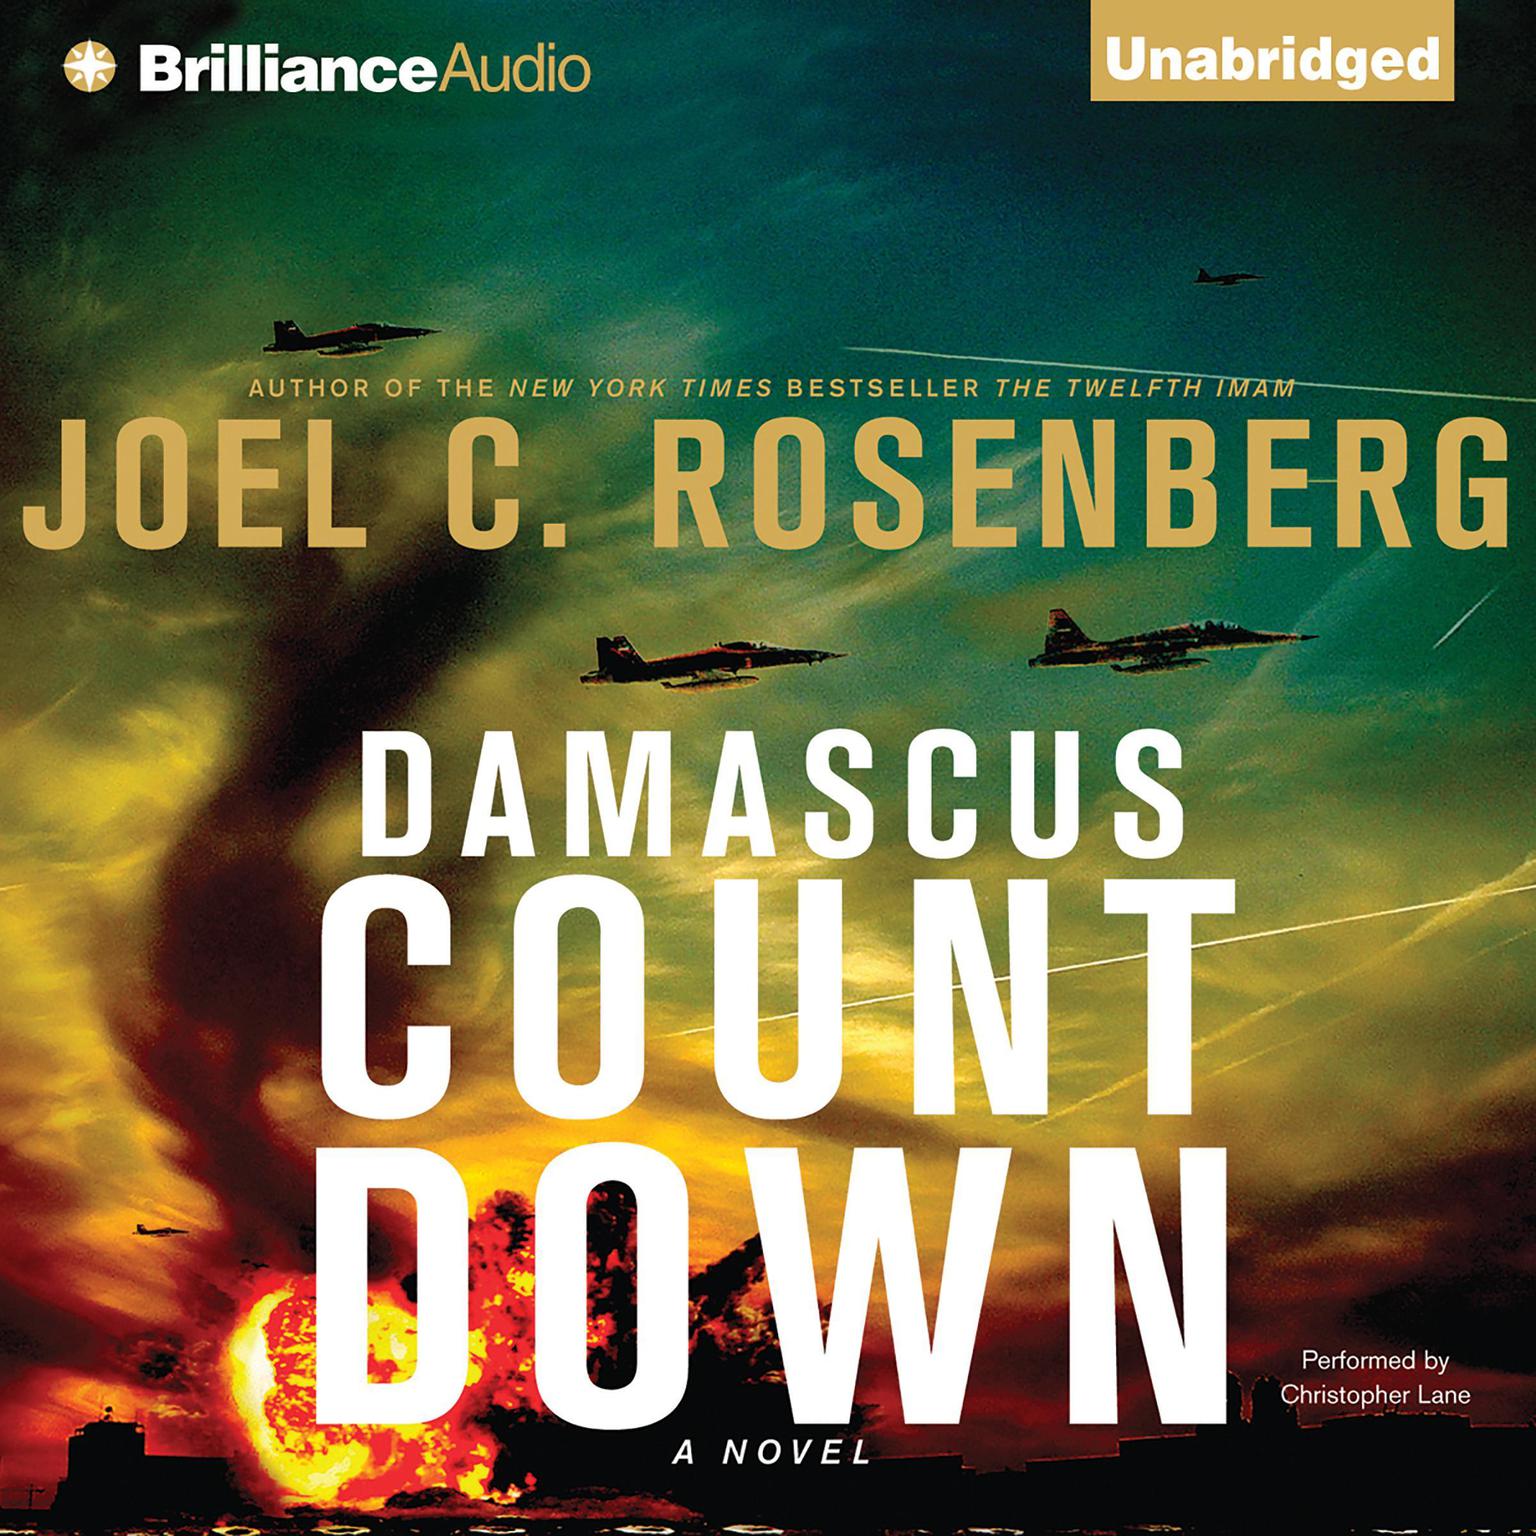 Damascus Countdown: A Novel Audiobook, by Joel C. Rosenberg